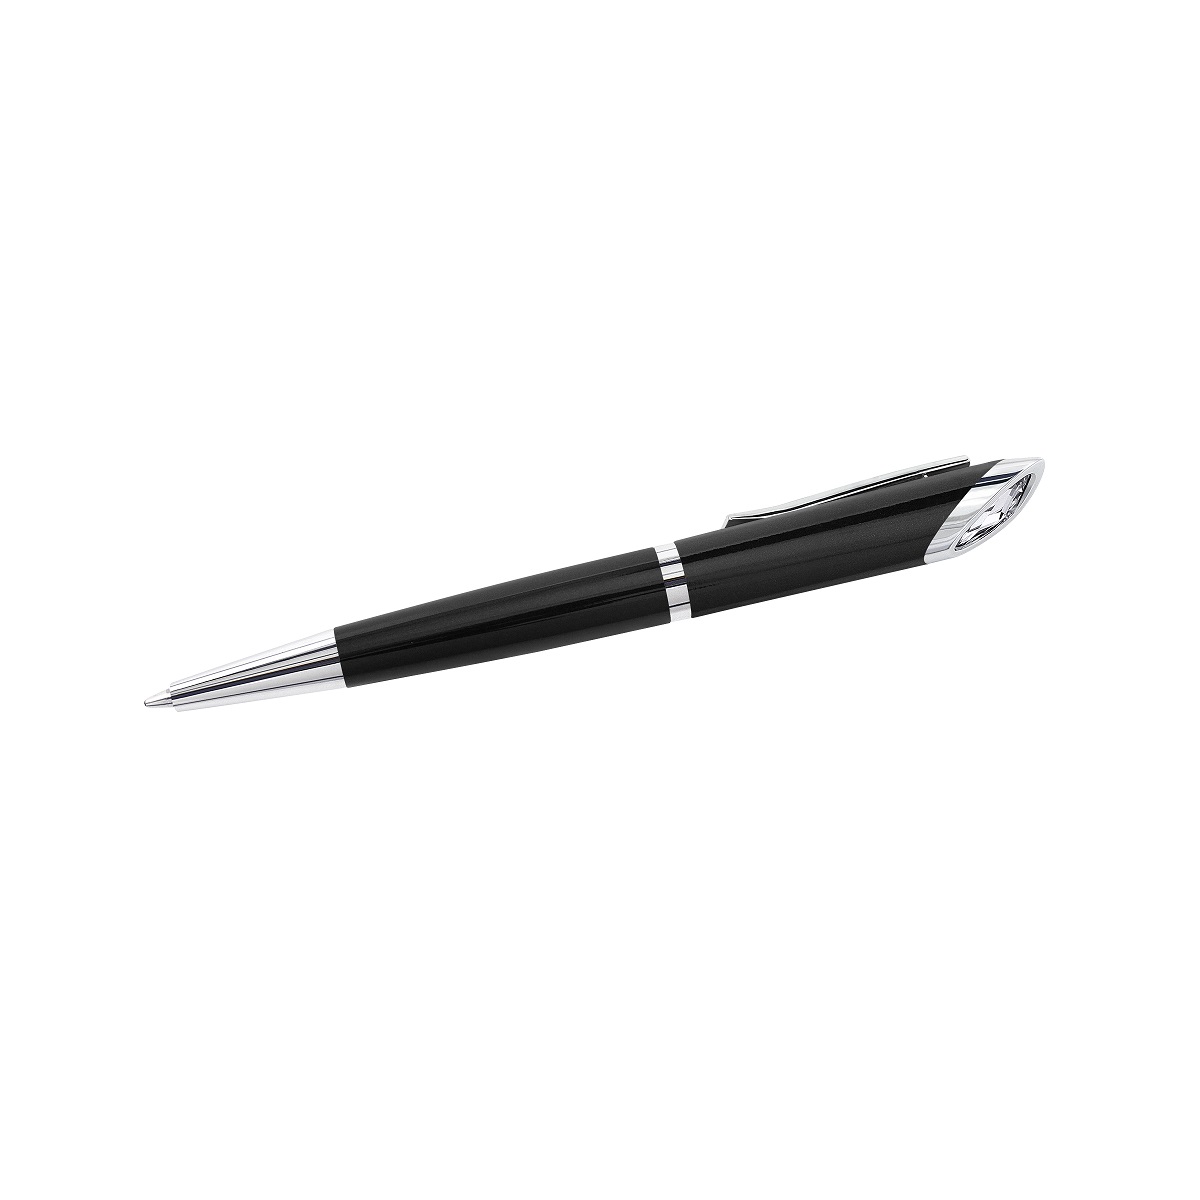 Swarovski Crystal Starlight Agenda Pen - Black - 5224366 - (Open Box)